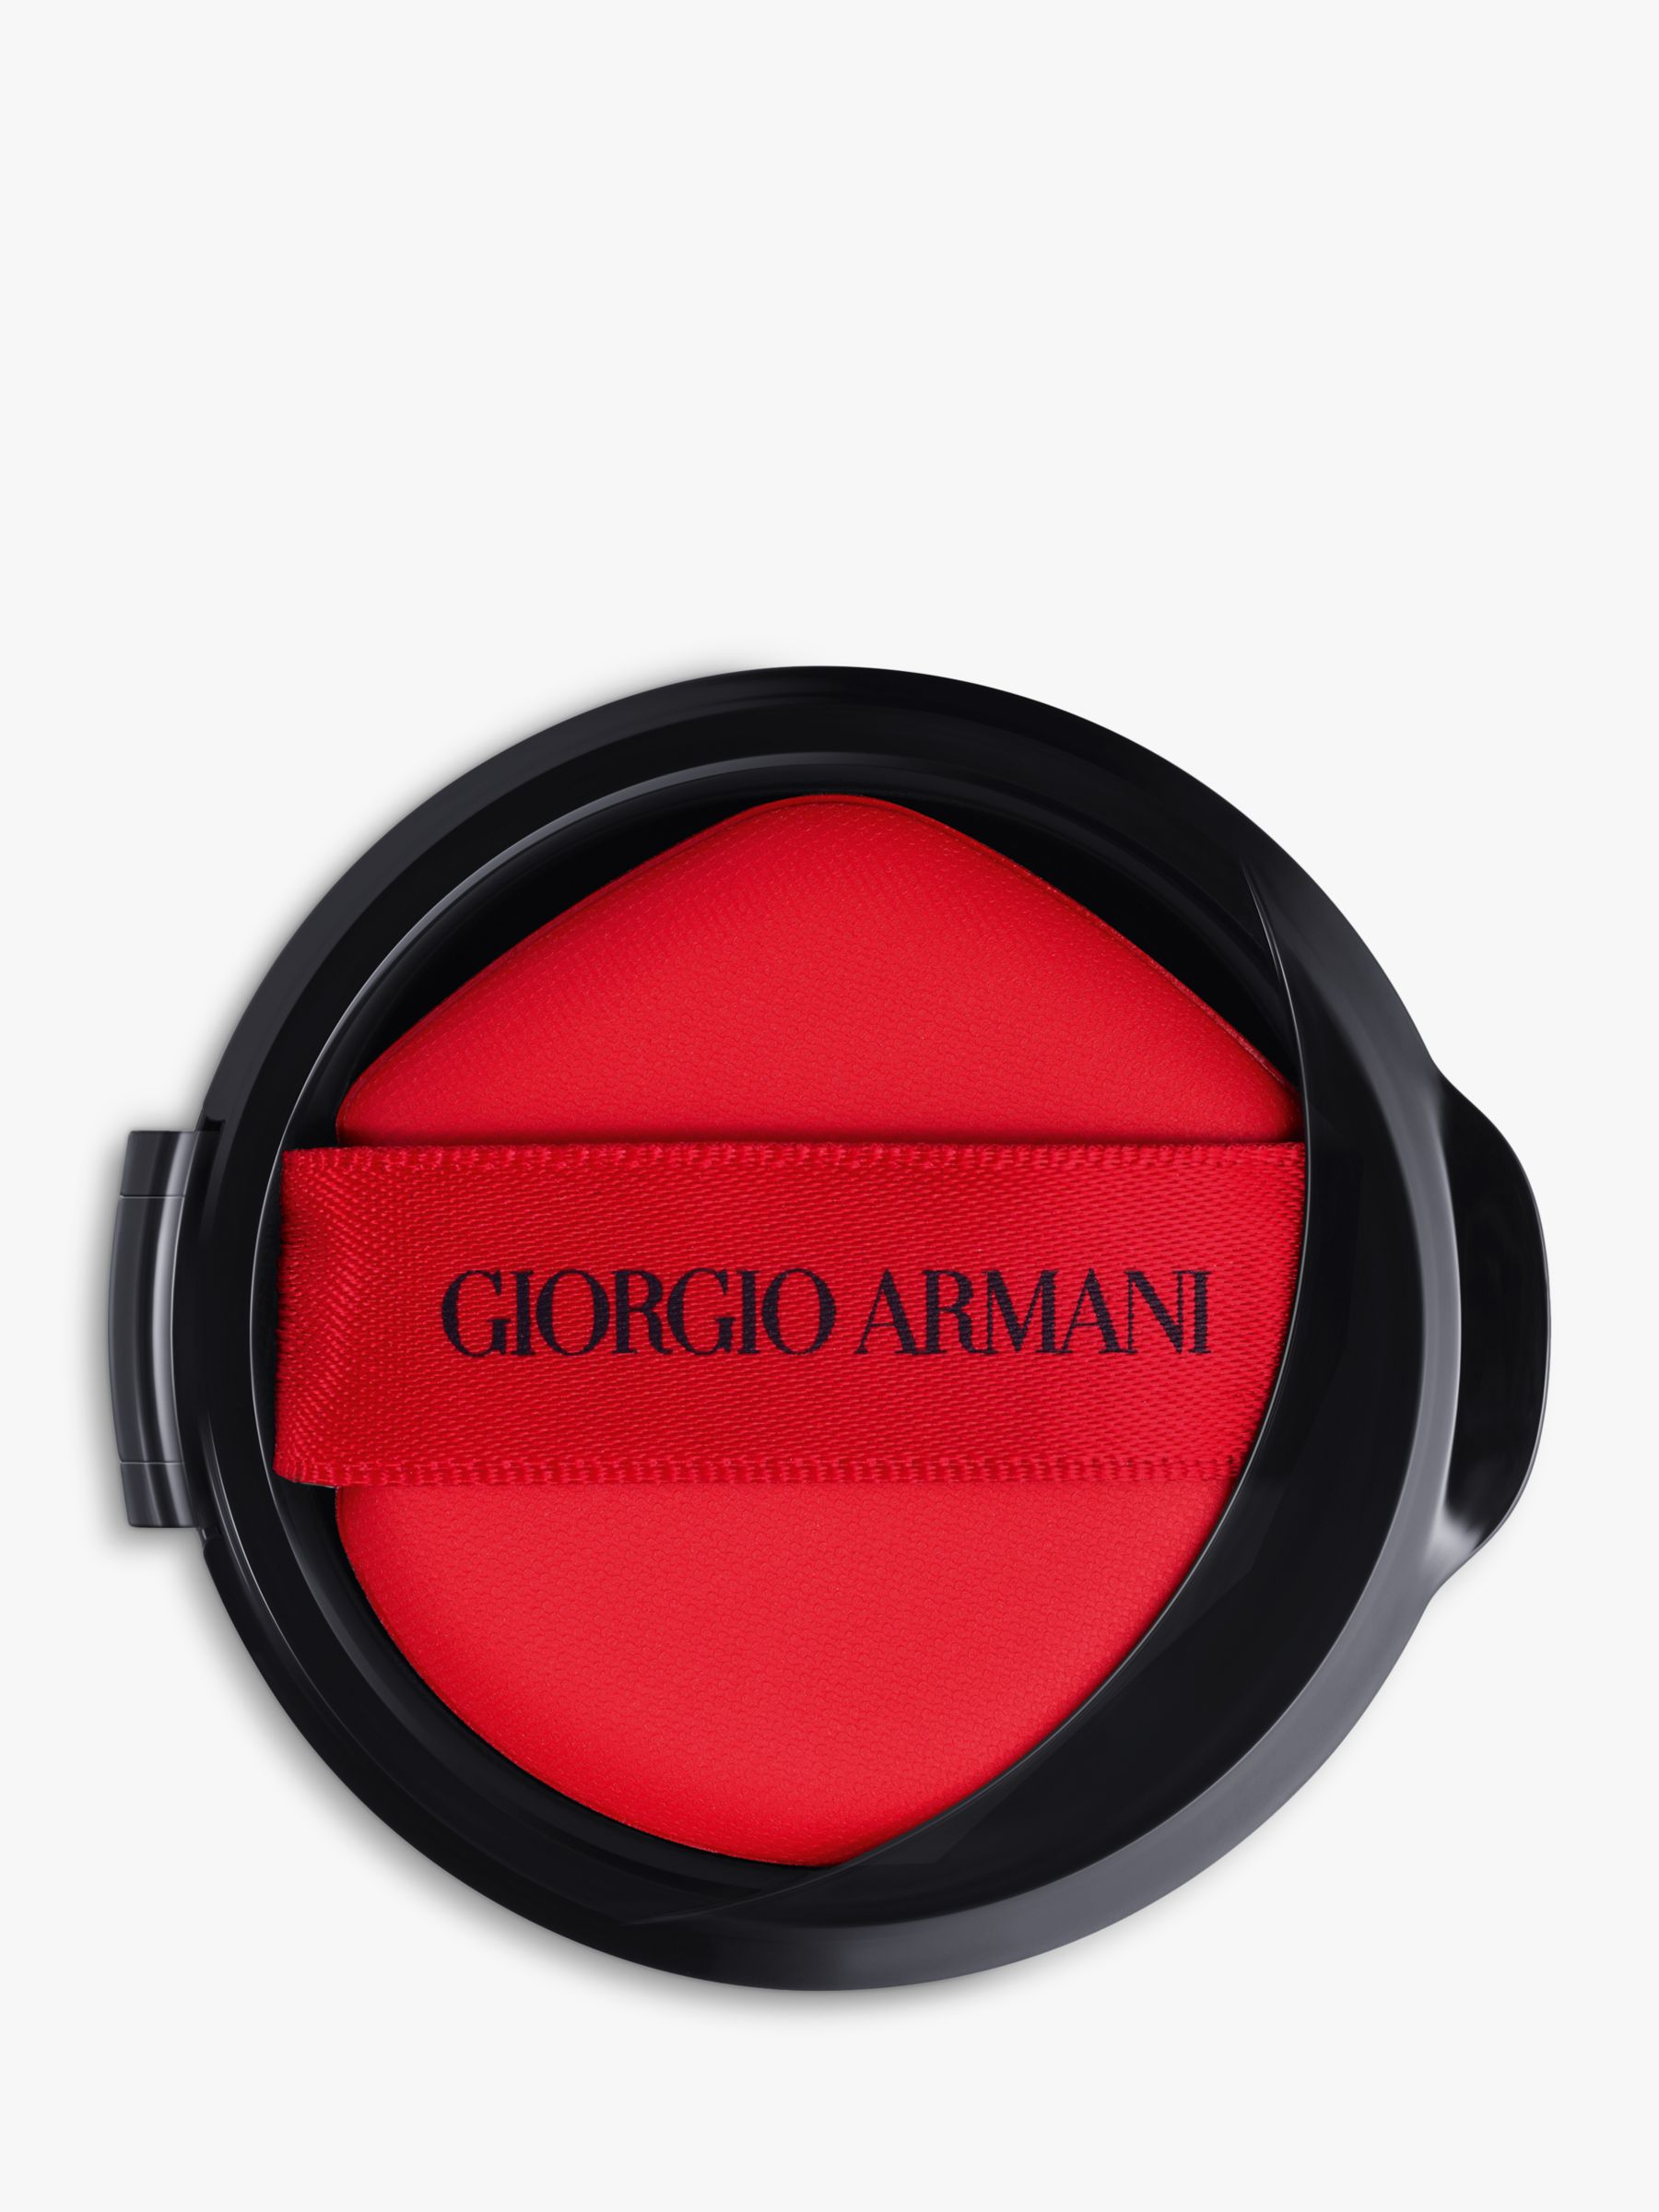 Giorgio Armani My Armani To Go Red Cushion Foundation Refill, 1